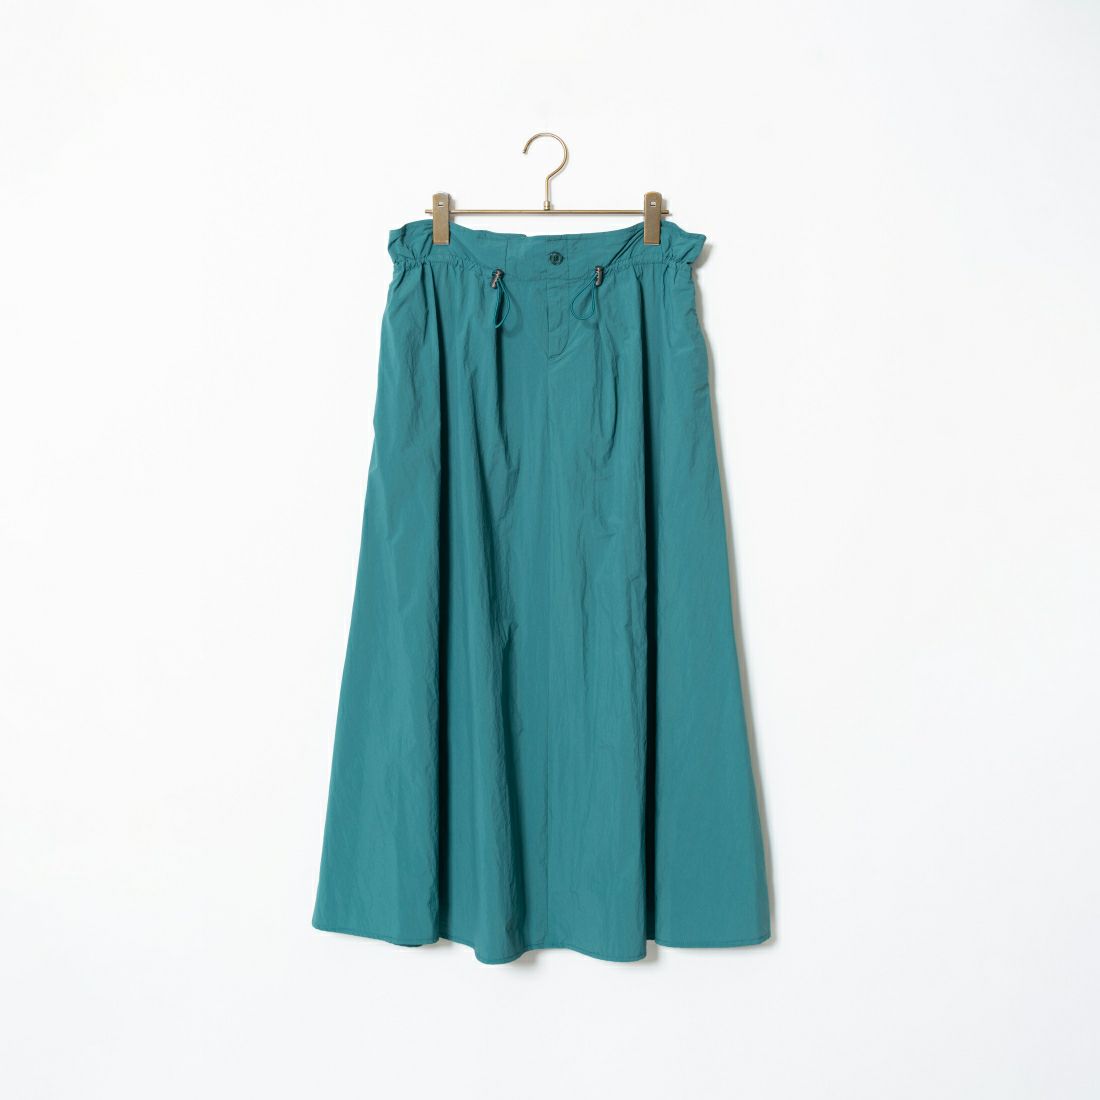 Jeans Factory Clothes [ジーンズファクトリークローズ] ドローコードギャザースカート [21241062] 060 ｸﾞﾘｰﾝ